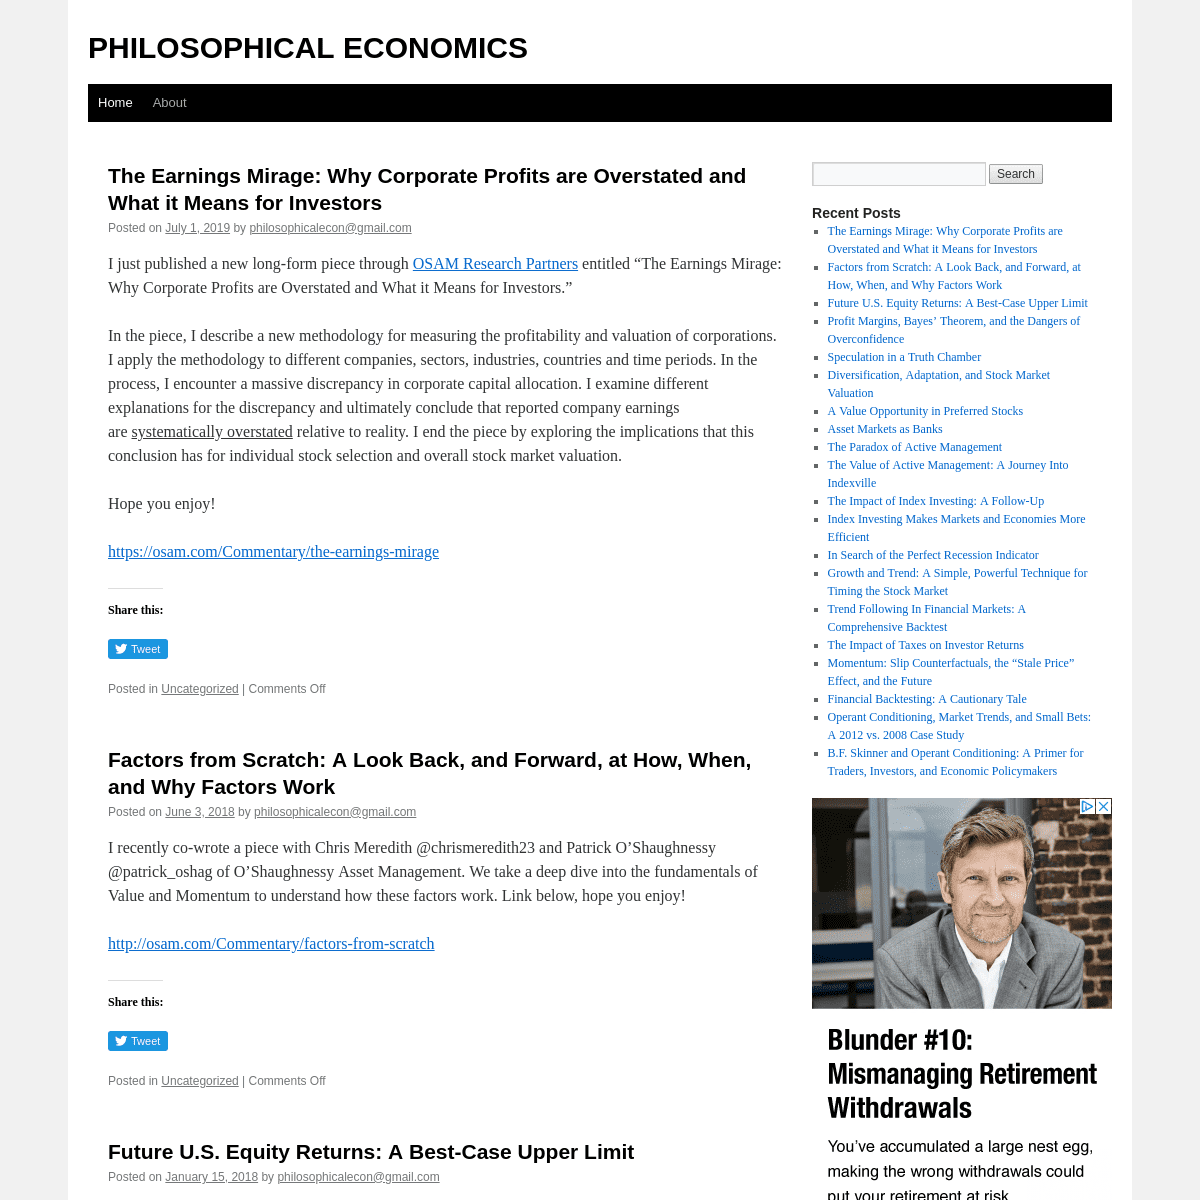 A complete backup of philosophicaleconomics.com